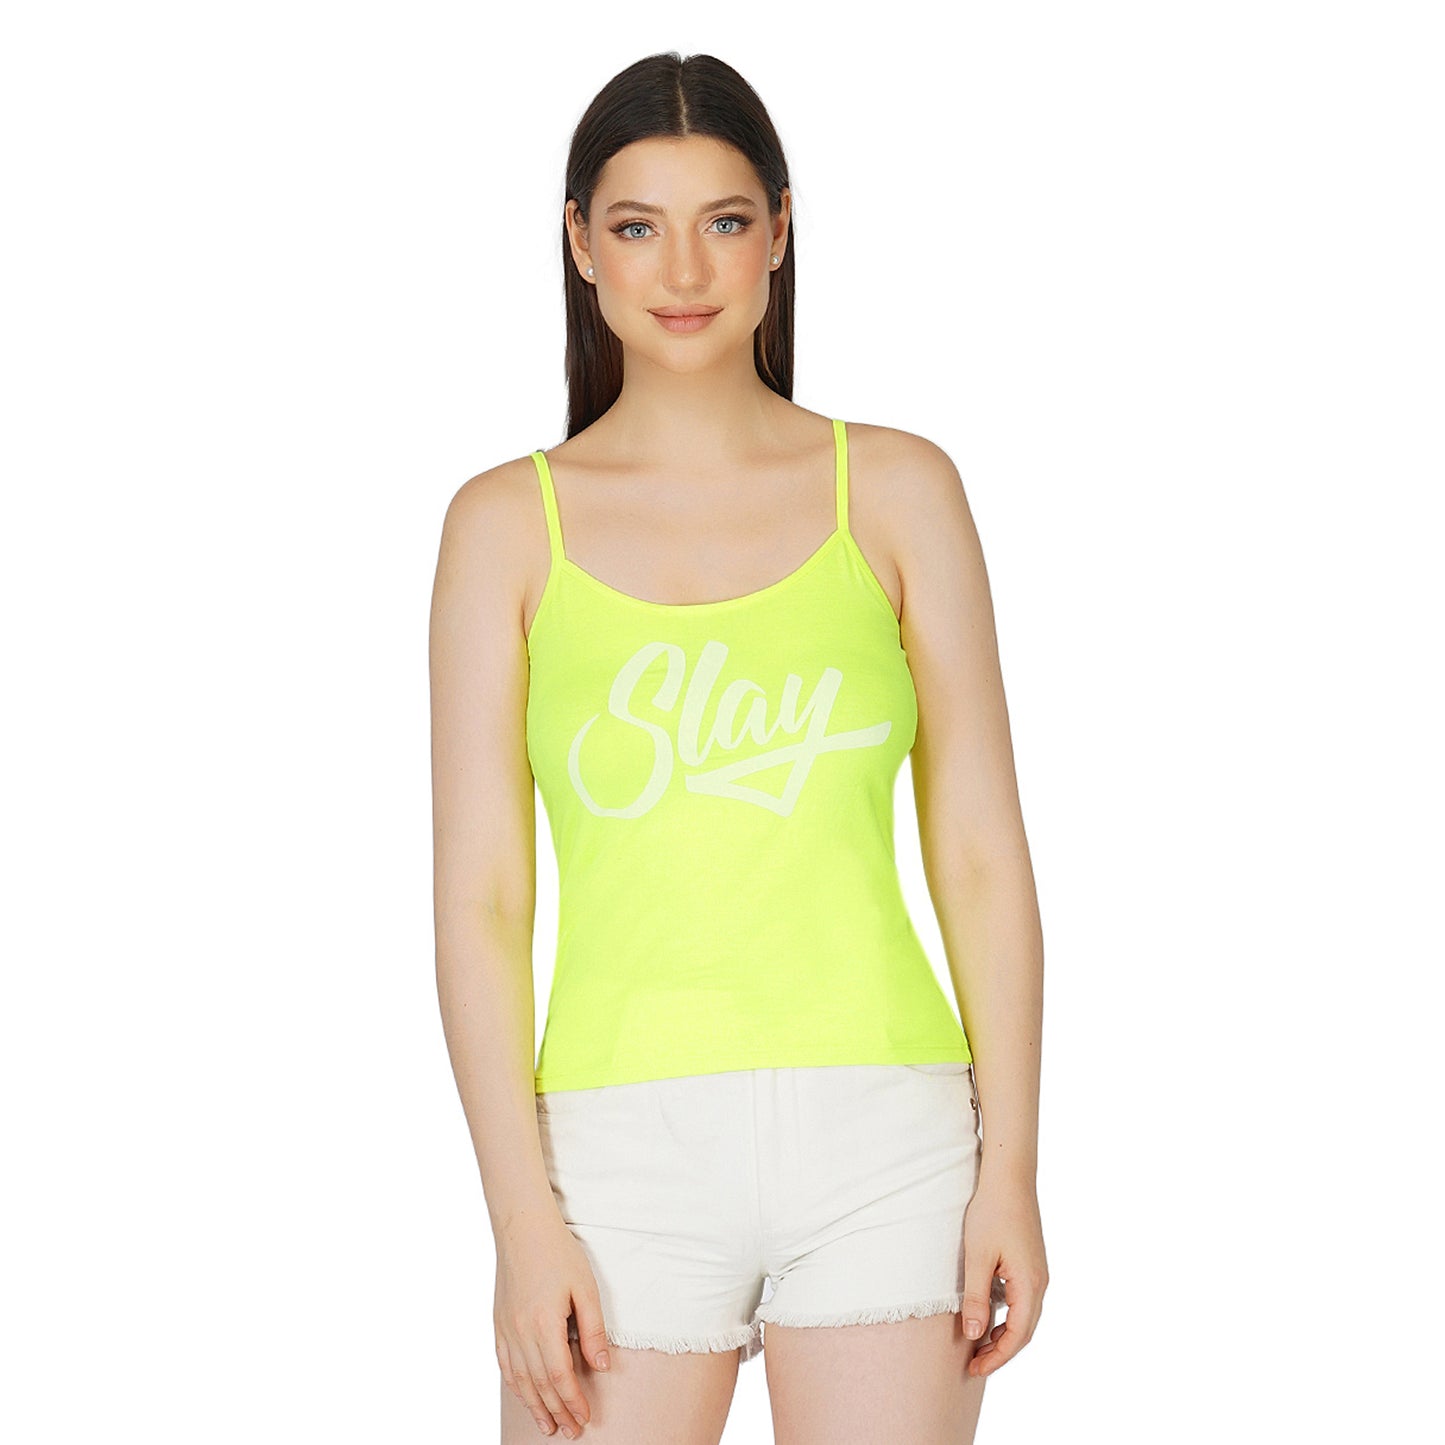 SLAY. Women's Neon Green Printed Camisole